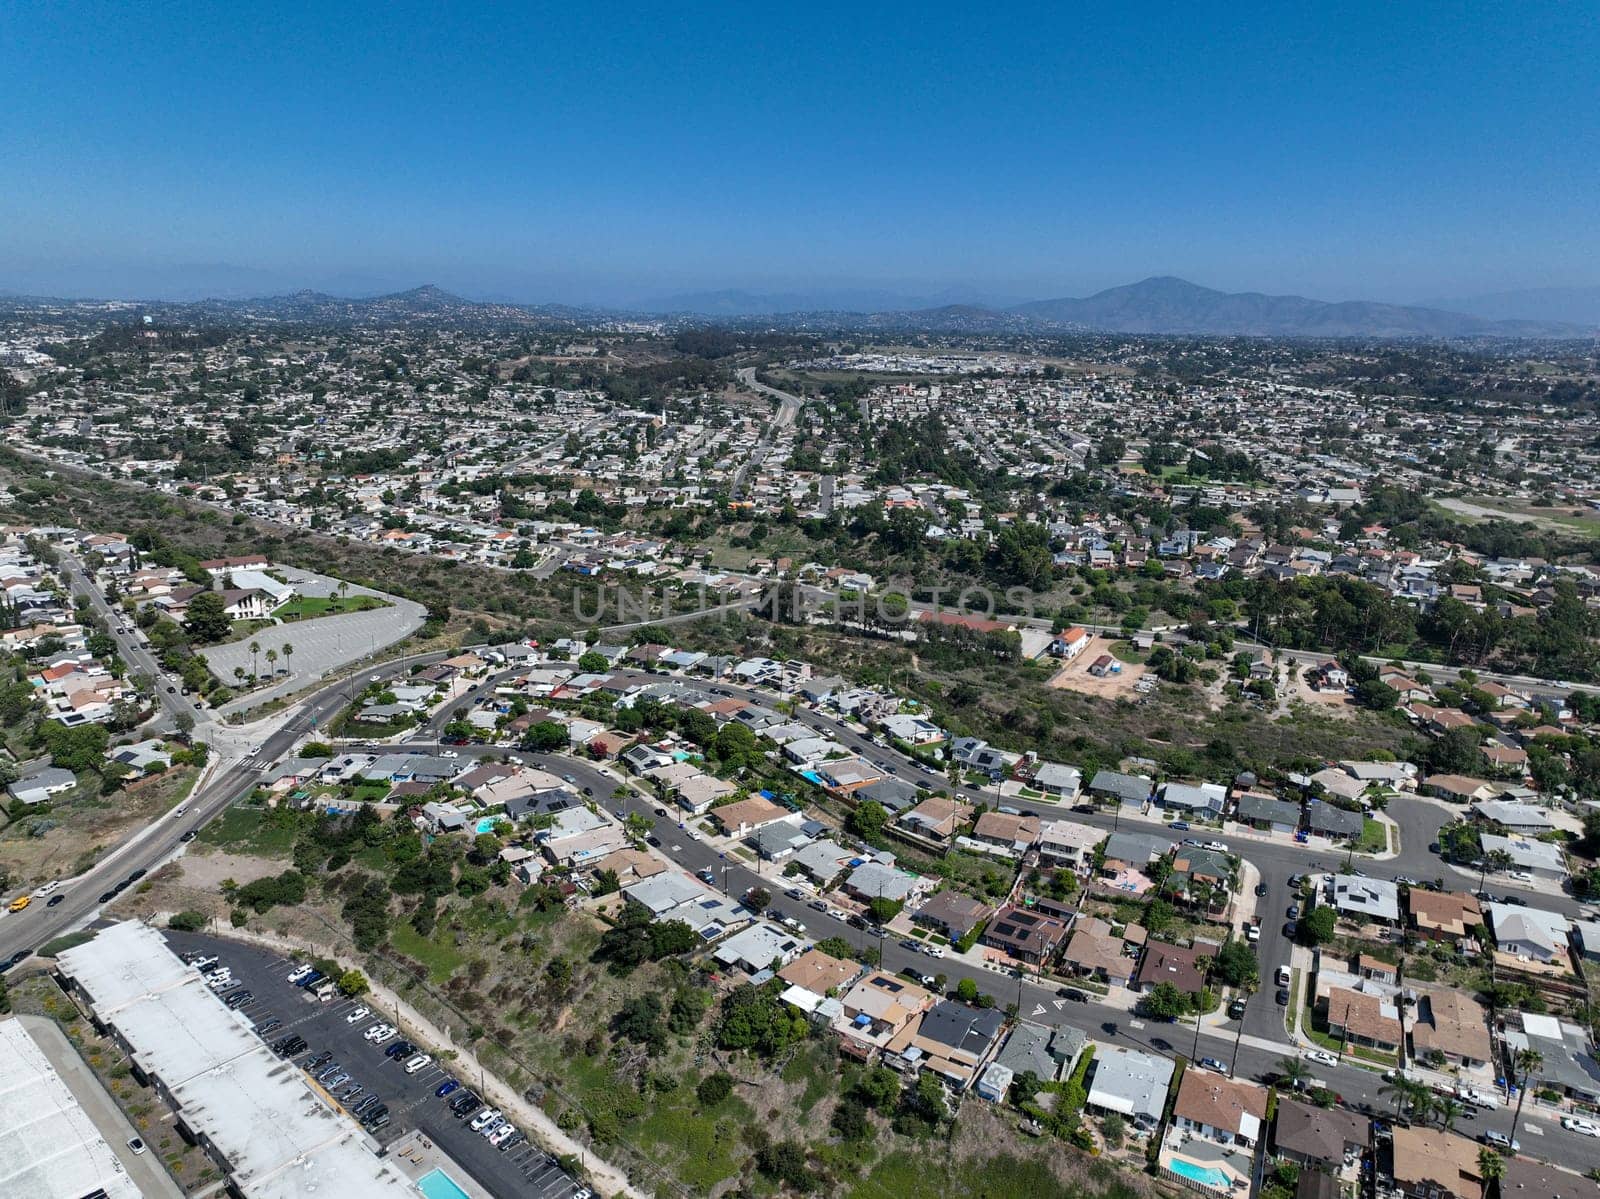 Aerial view of South San Diego residential neighborhood by Bonandbon